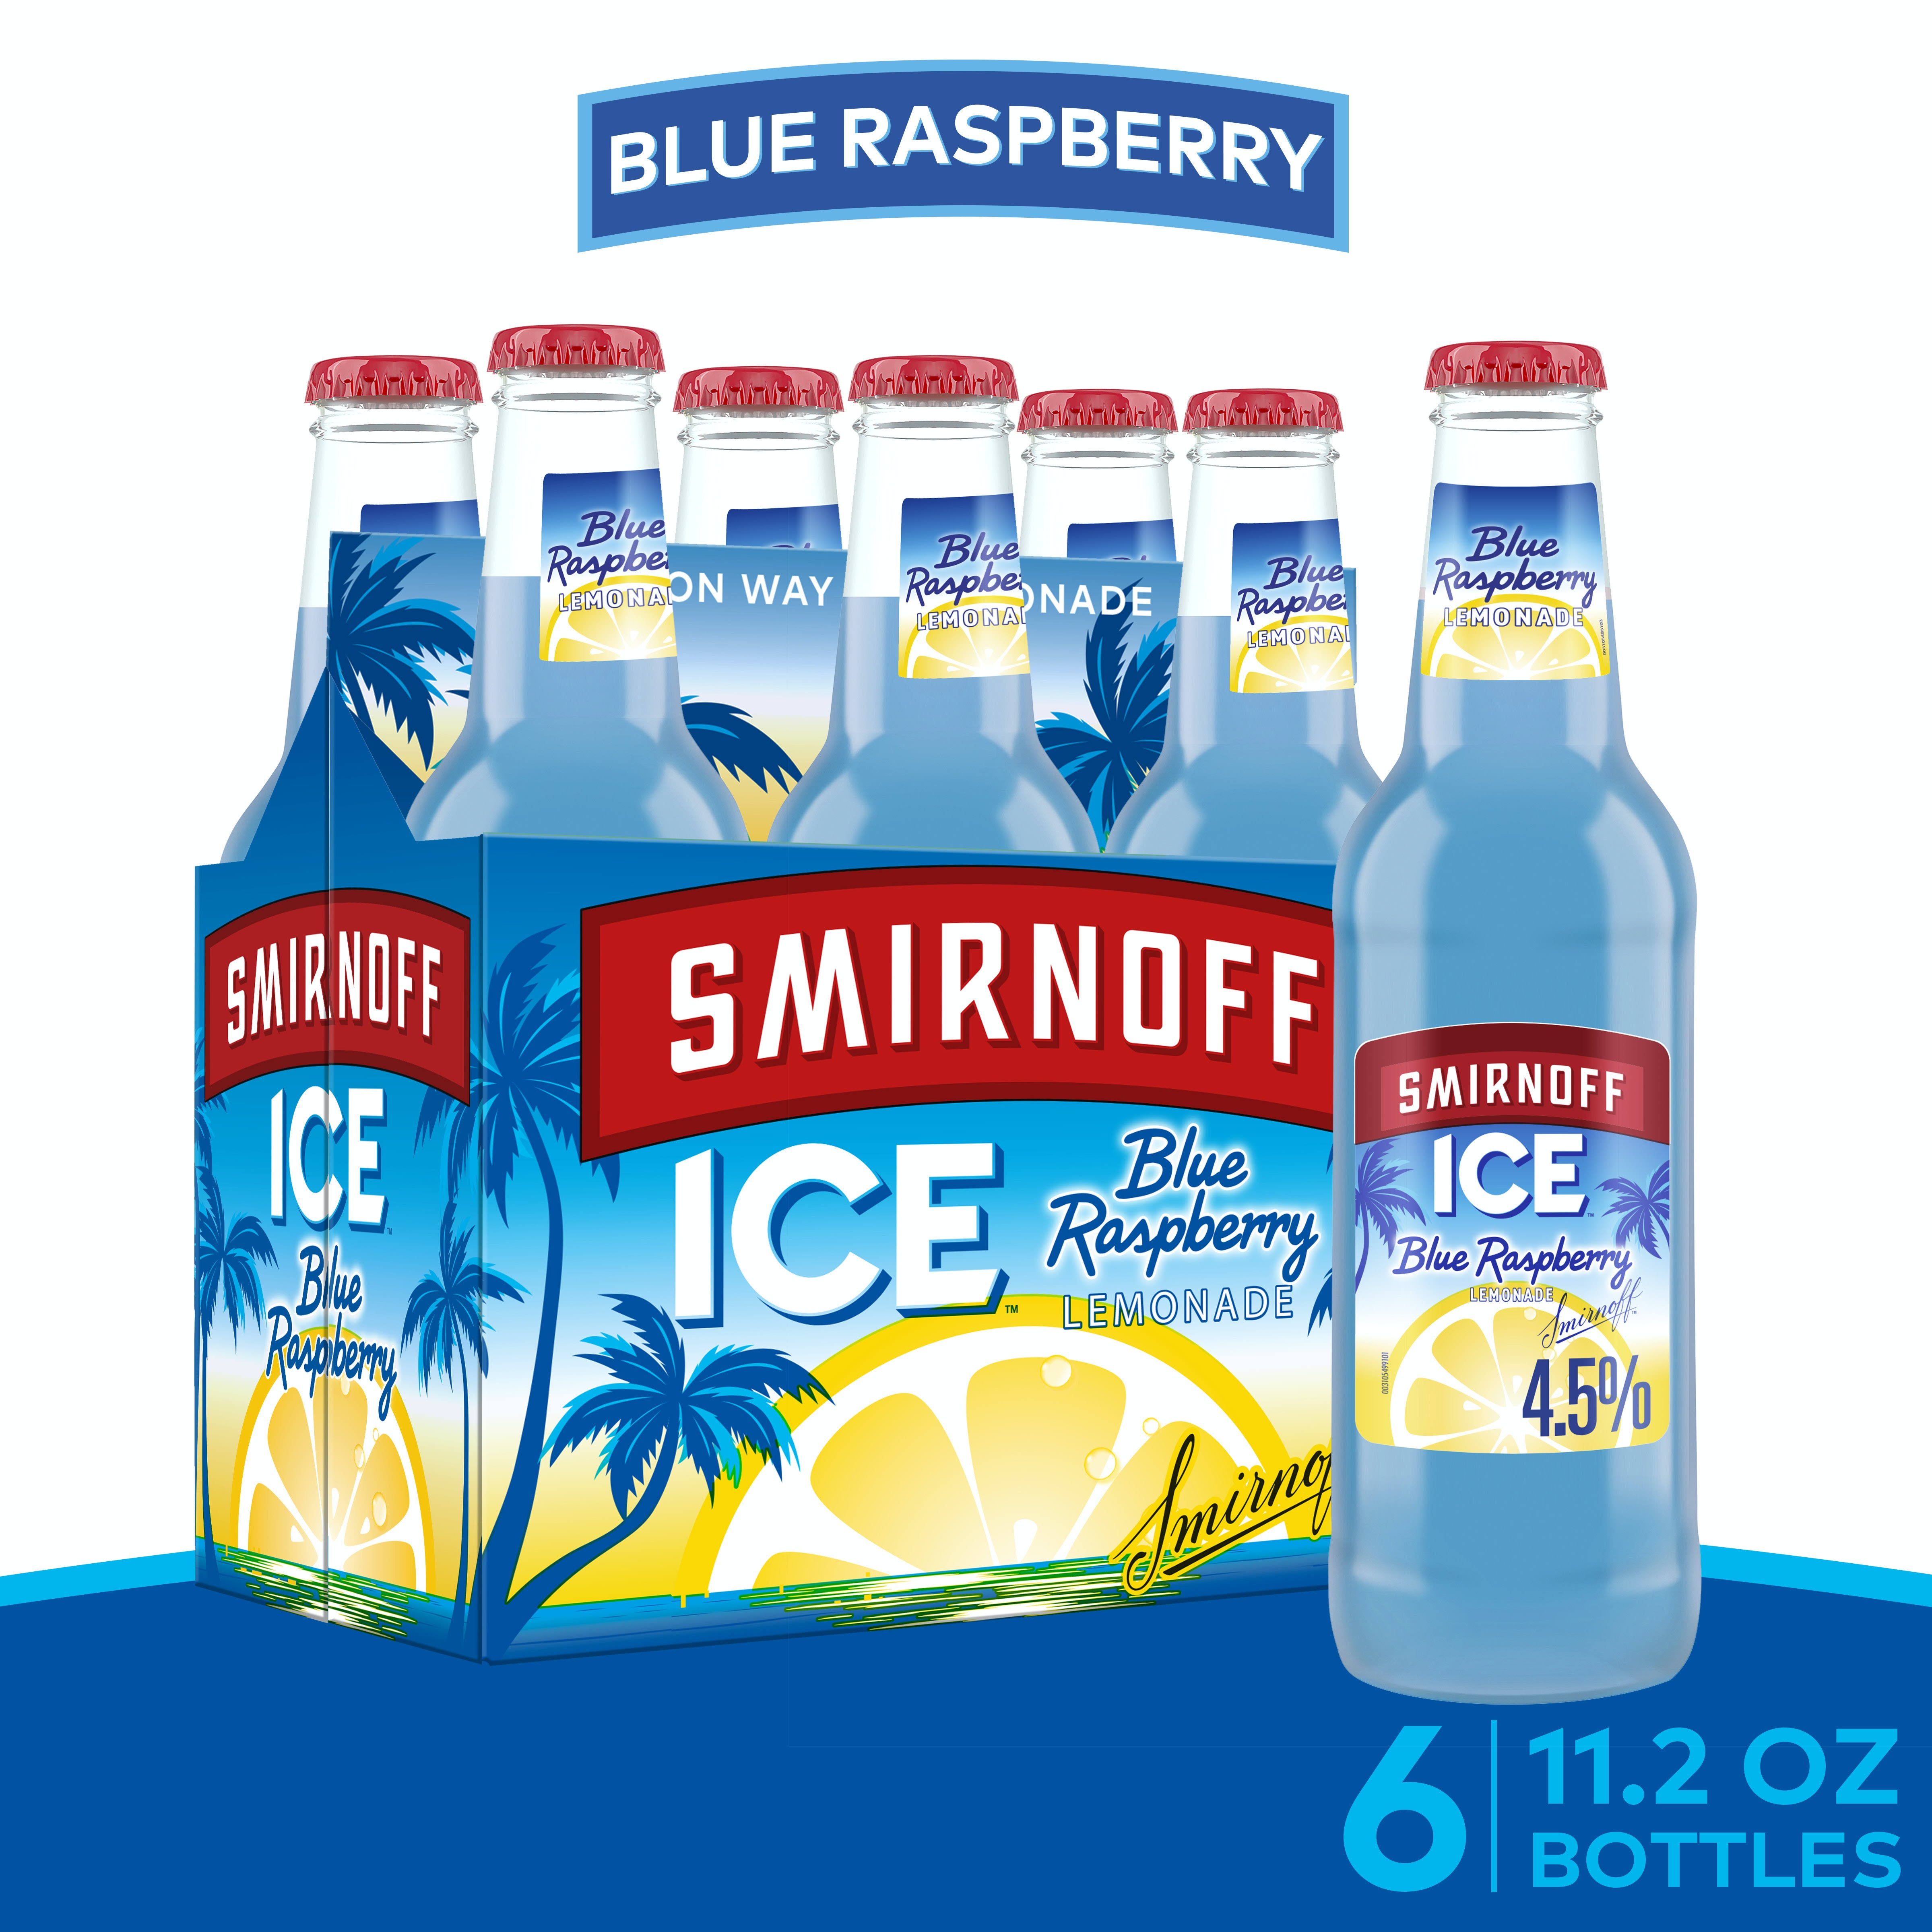 Smirnoff Ice Blue Raspberry Lemonade - 11.2 fl oz